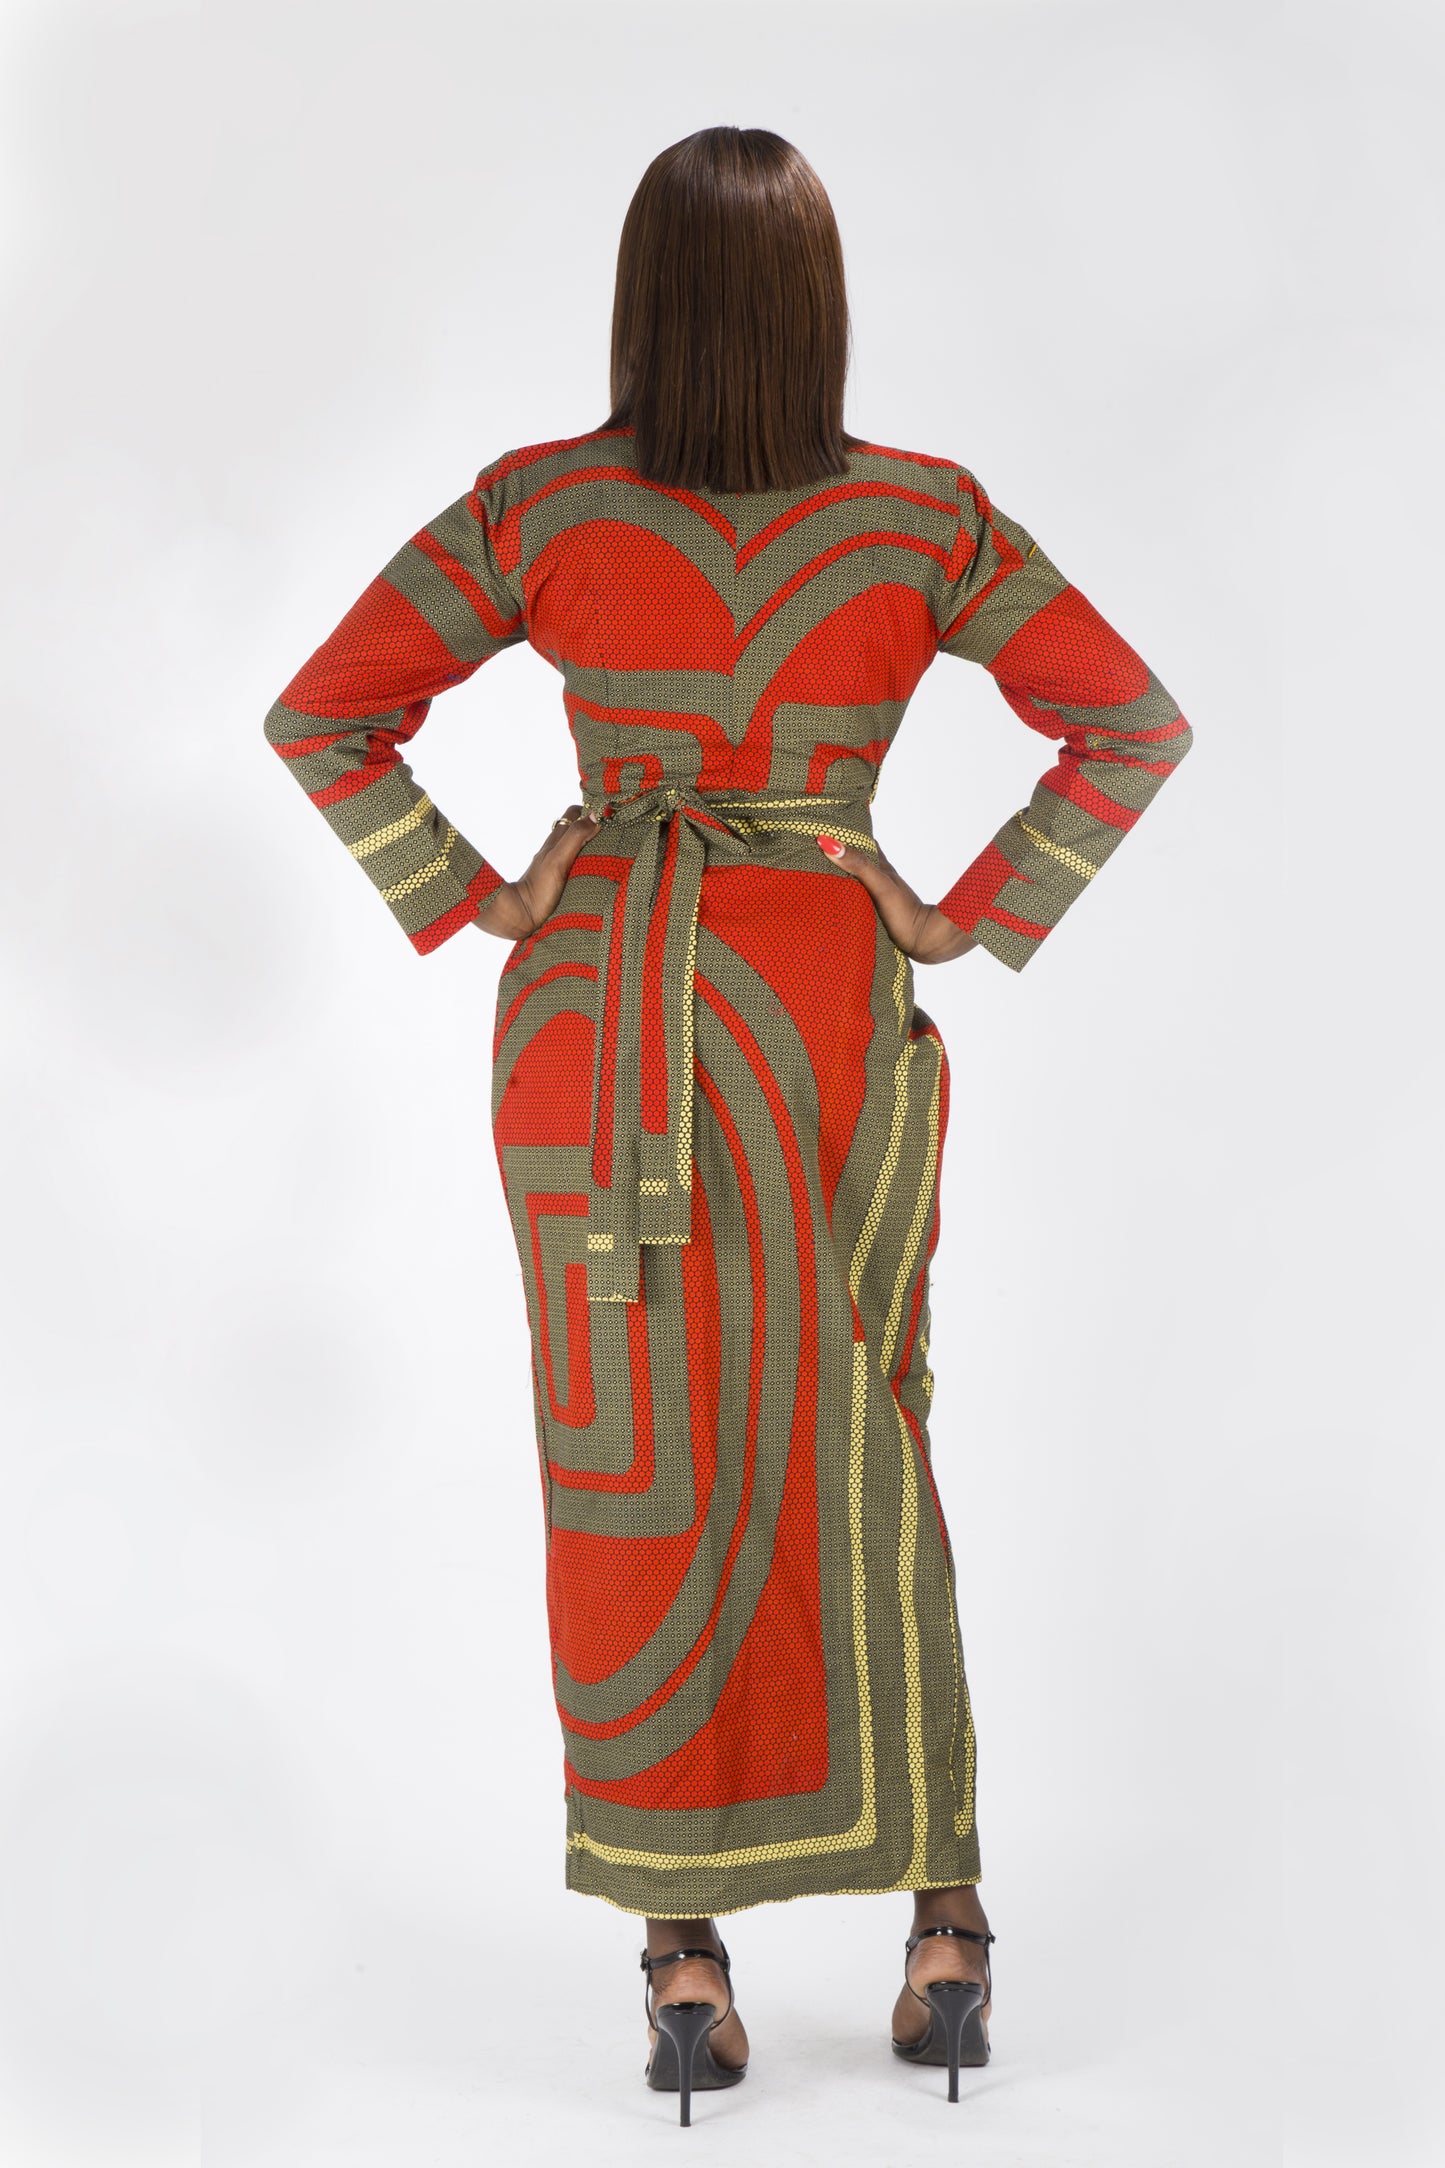 ORANGE GREEN AFRICAN ANKARA PRINT PLUS SIZE CLOTHING PARTY WRAP DRESS